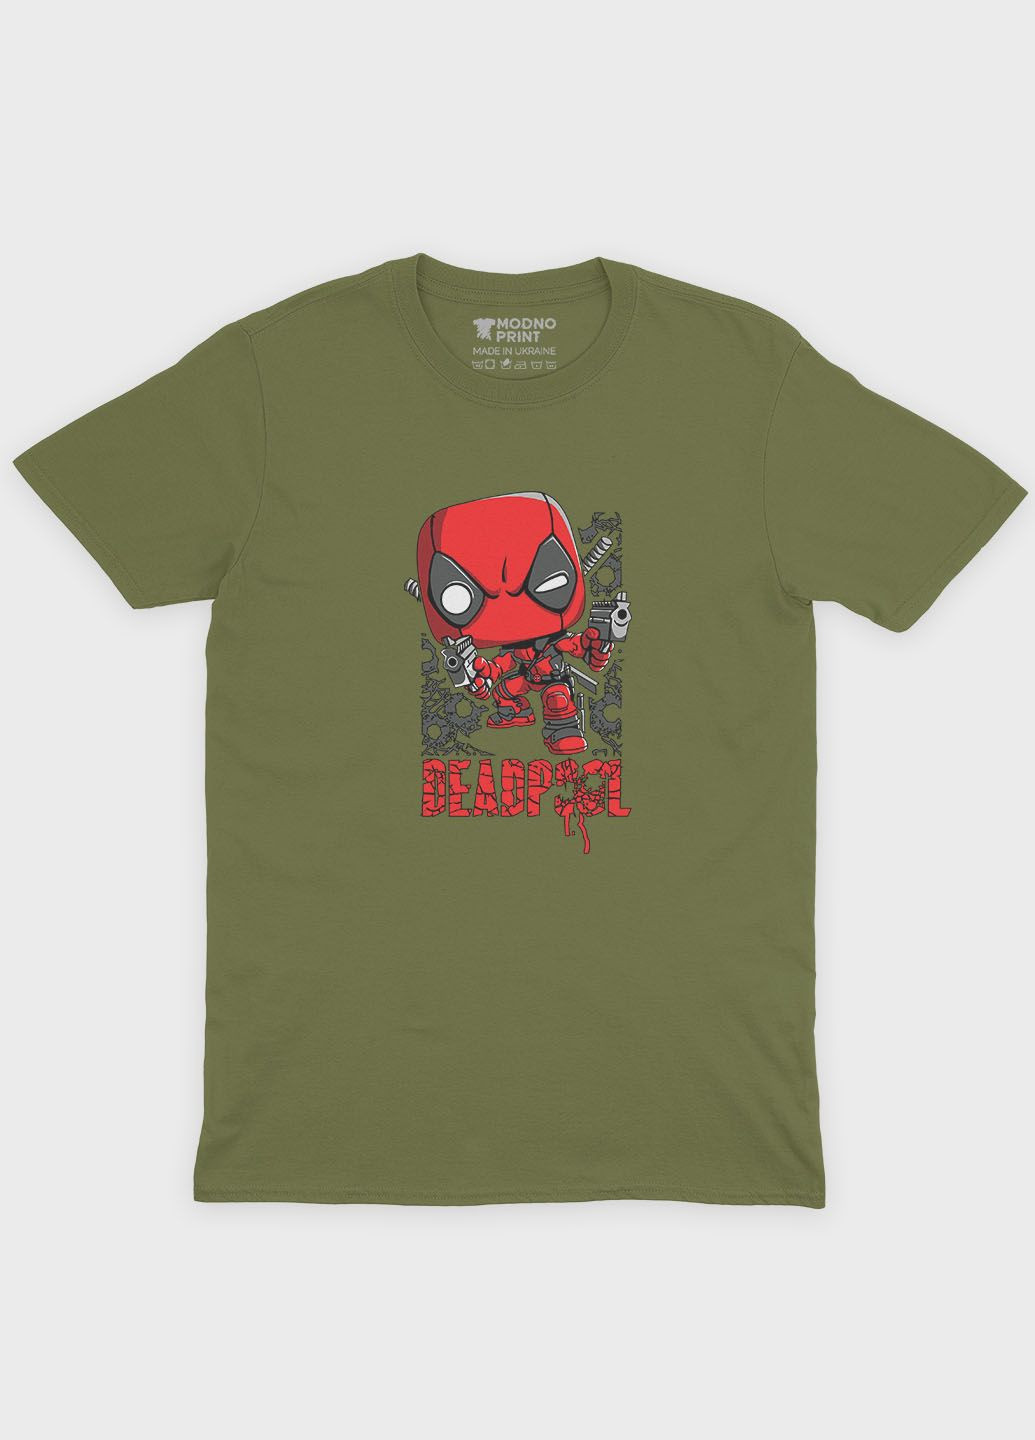 Хаки (оливковая) летняя мужская футболка с принтом антигероя - дедпул (ts001-1-hgr-006-015-009-f) Modno